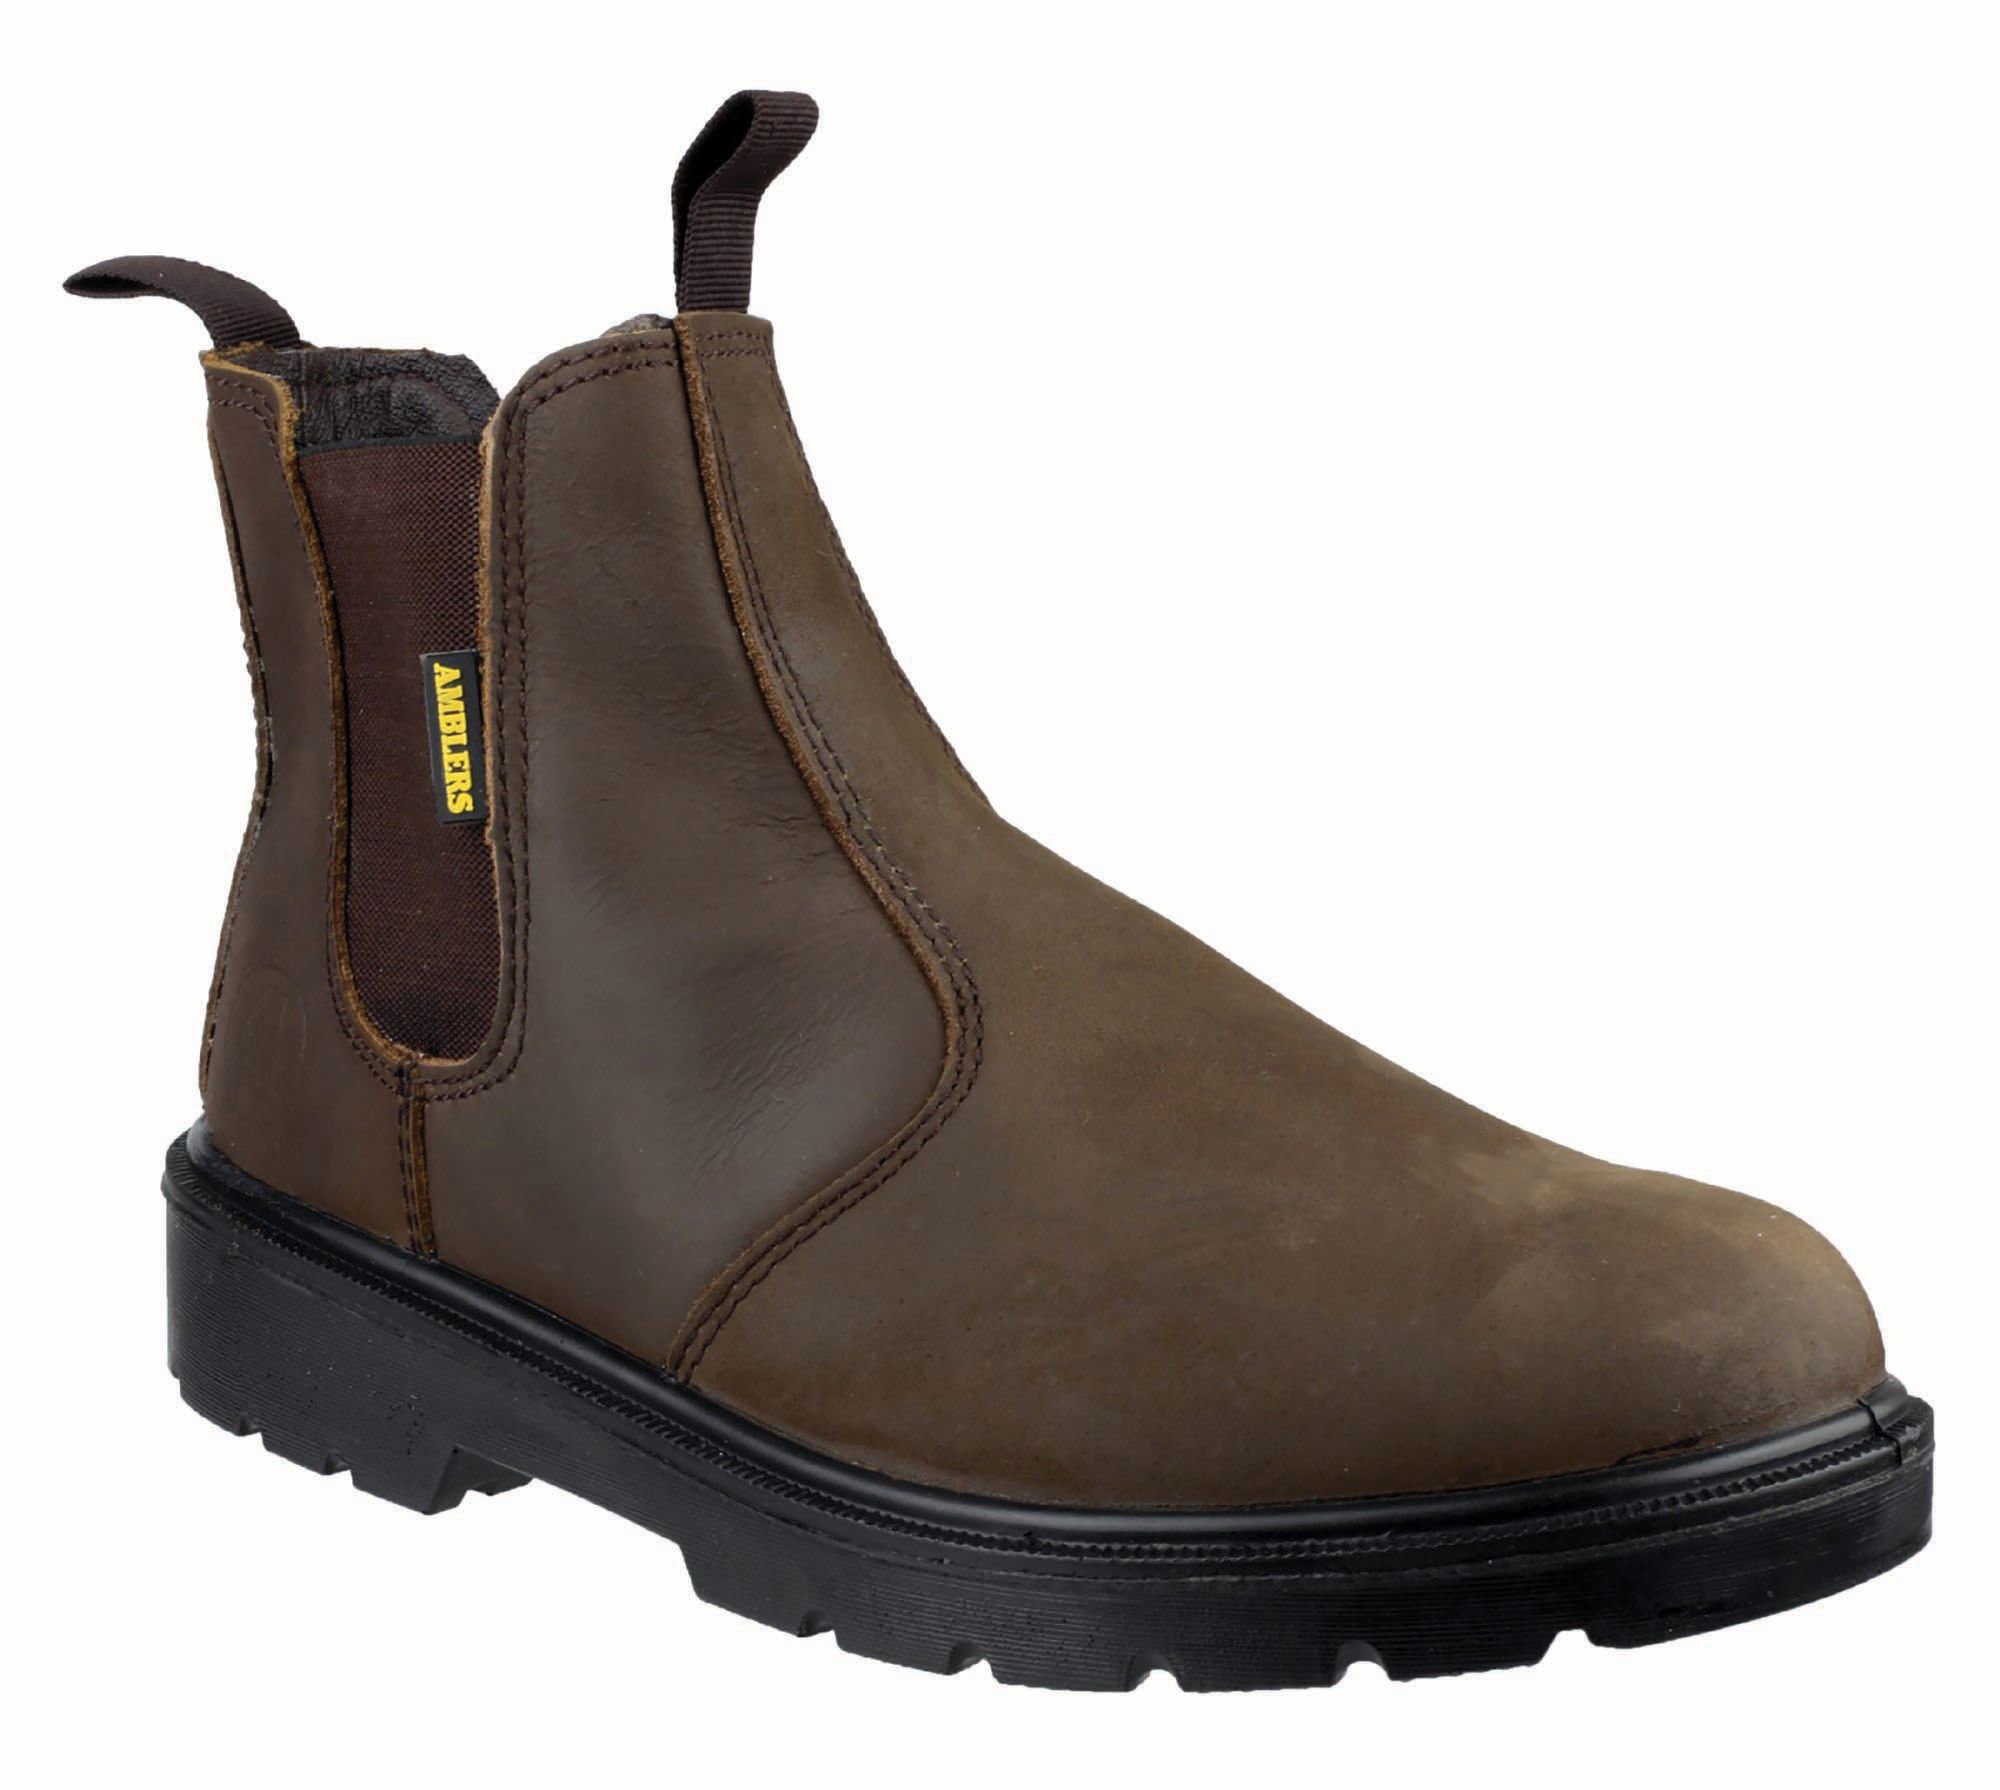 Image of Amblers Safety FS128 Dealer Safety Boot - Brown Size 7